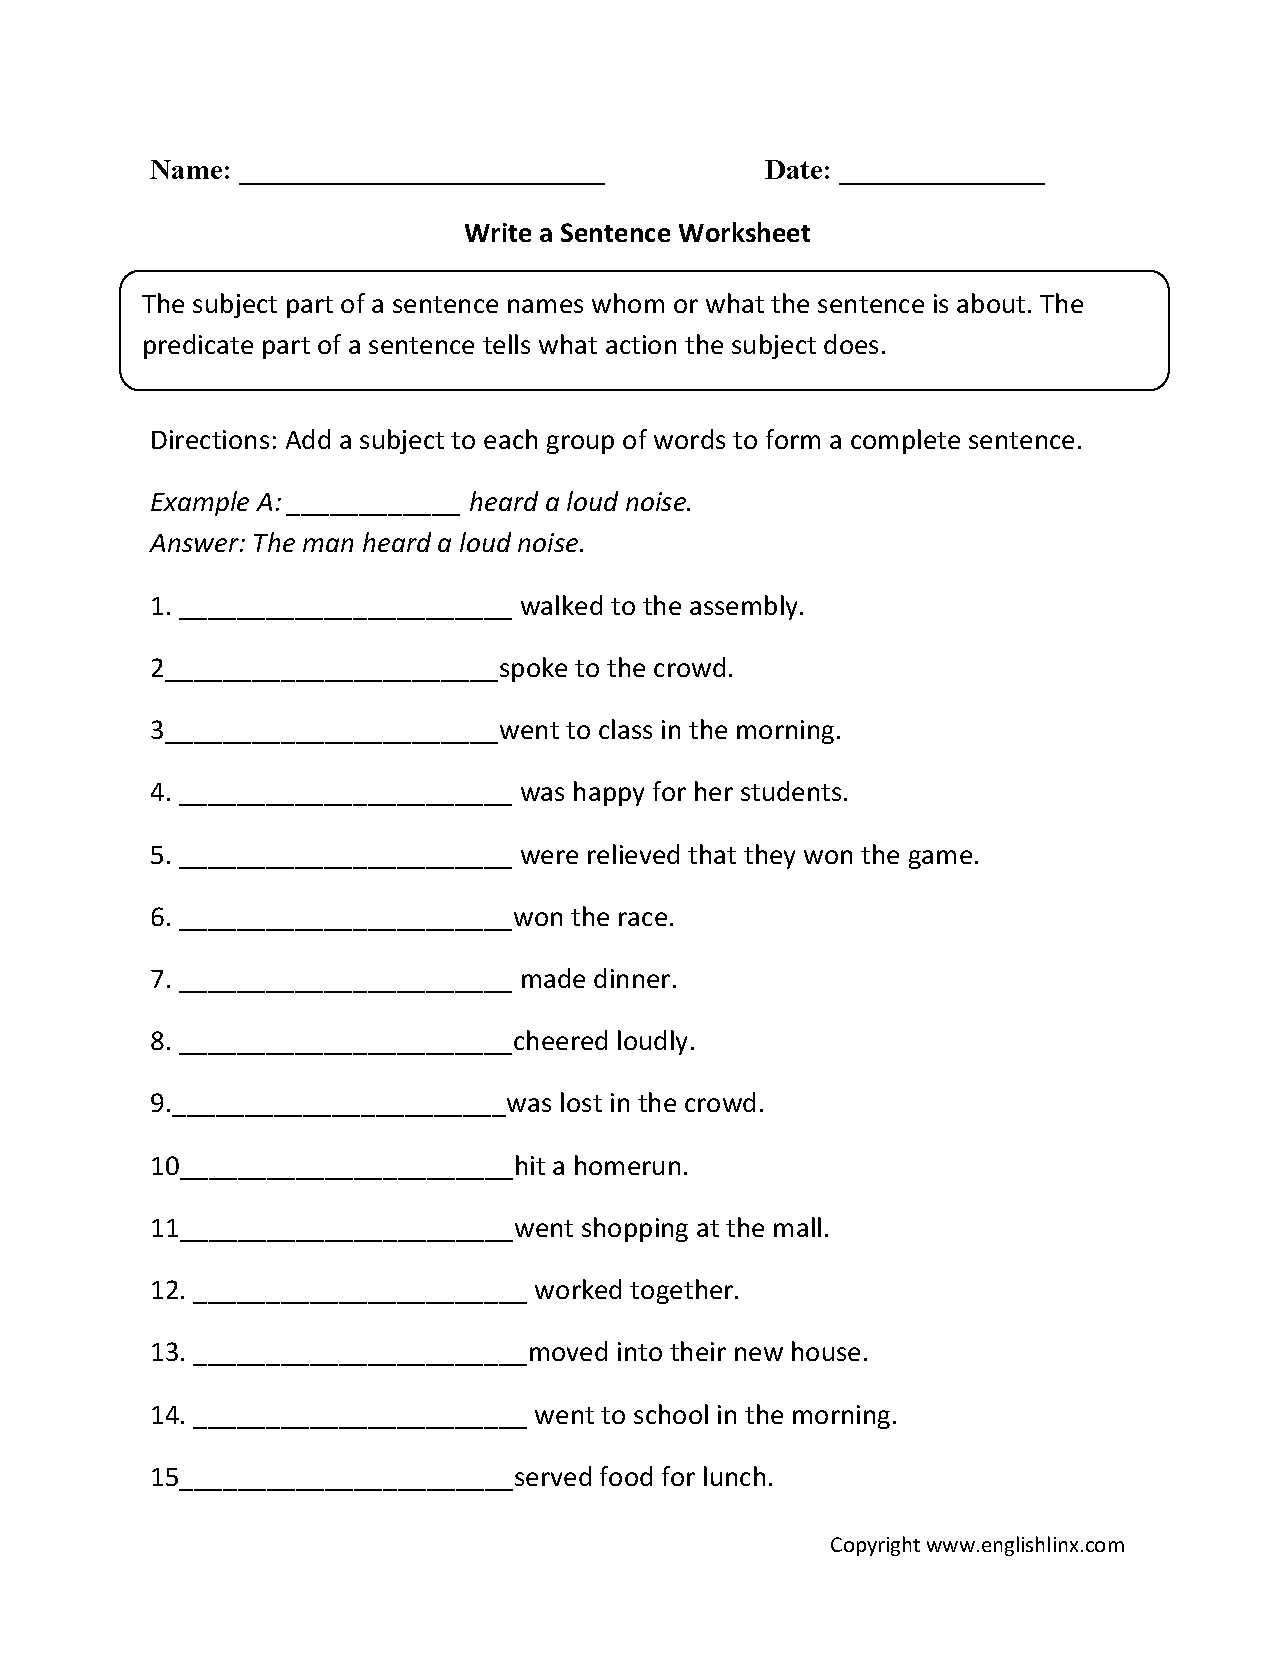 Writing Sentences Worksheets Also Sentence Building Worksheets & December Sentence Building""sc" 1"st